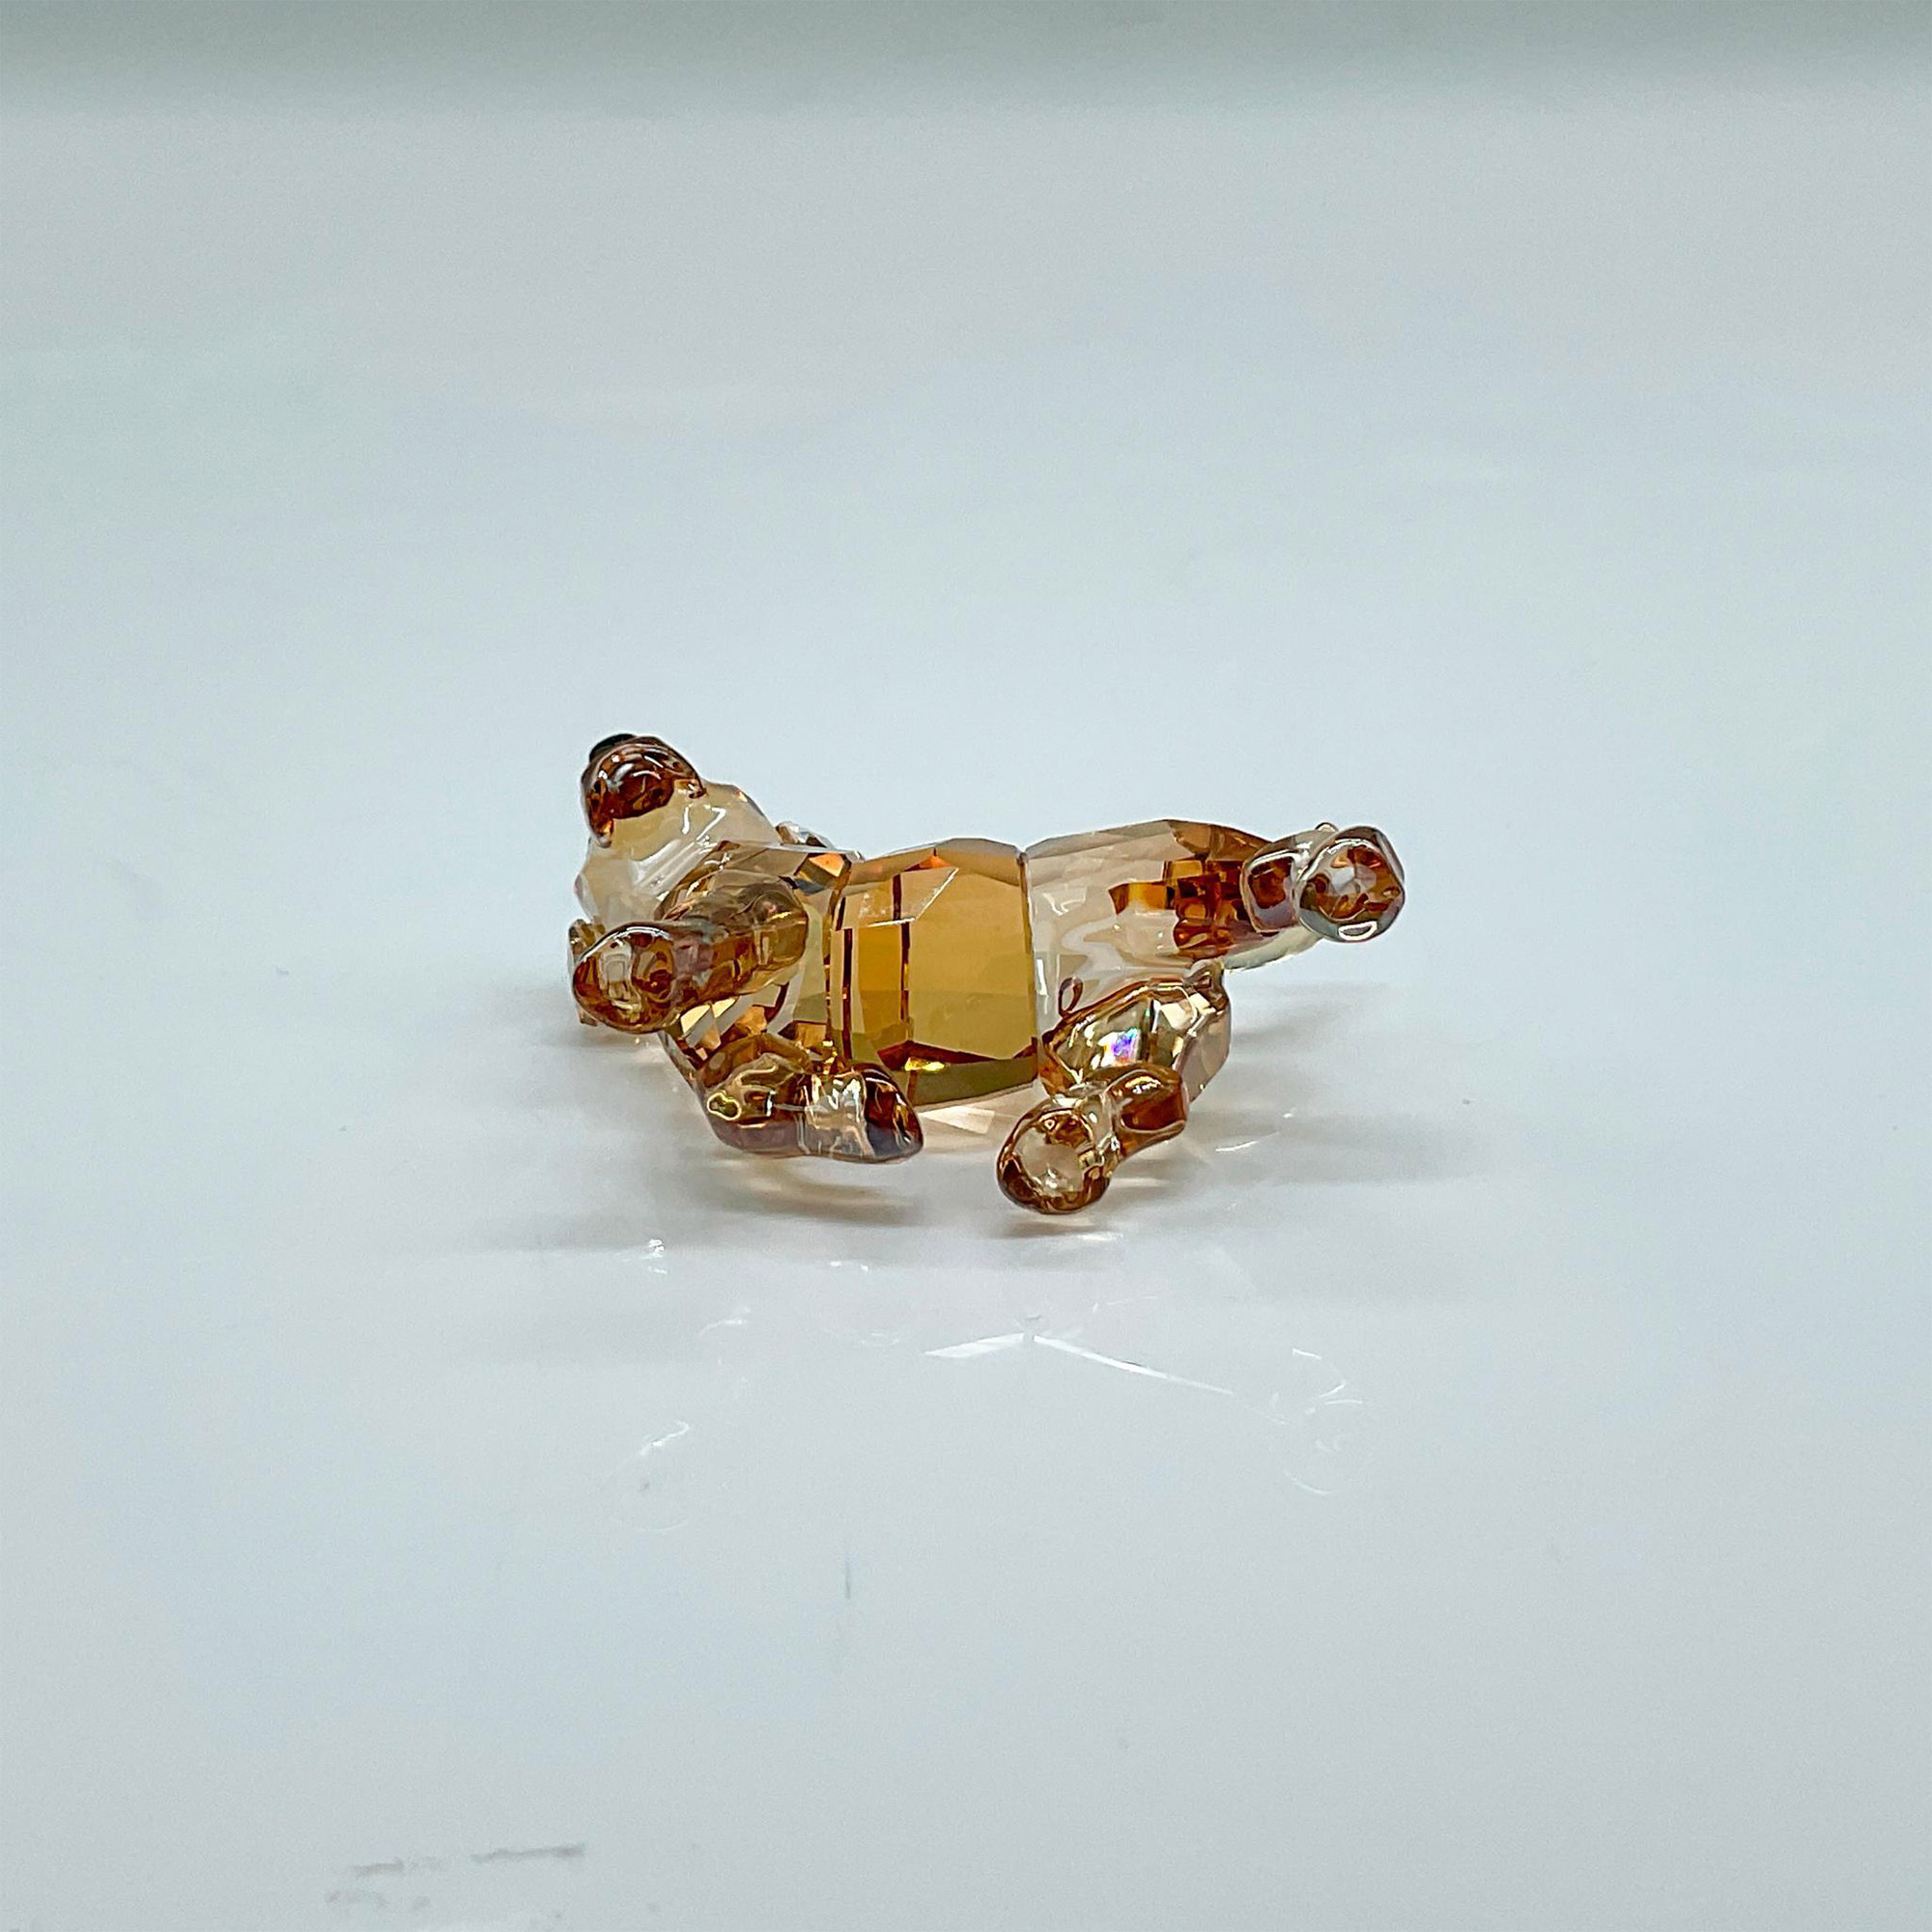 Swarovski Crystal Figurine, Golden Retriever Puppy - Image 3 of 4